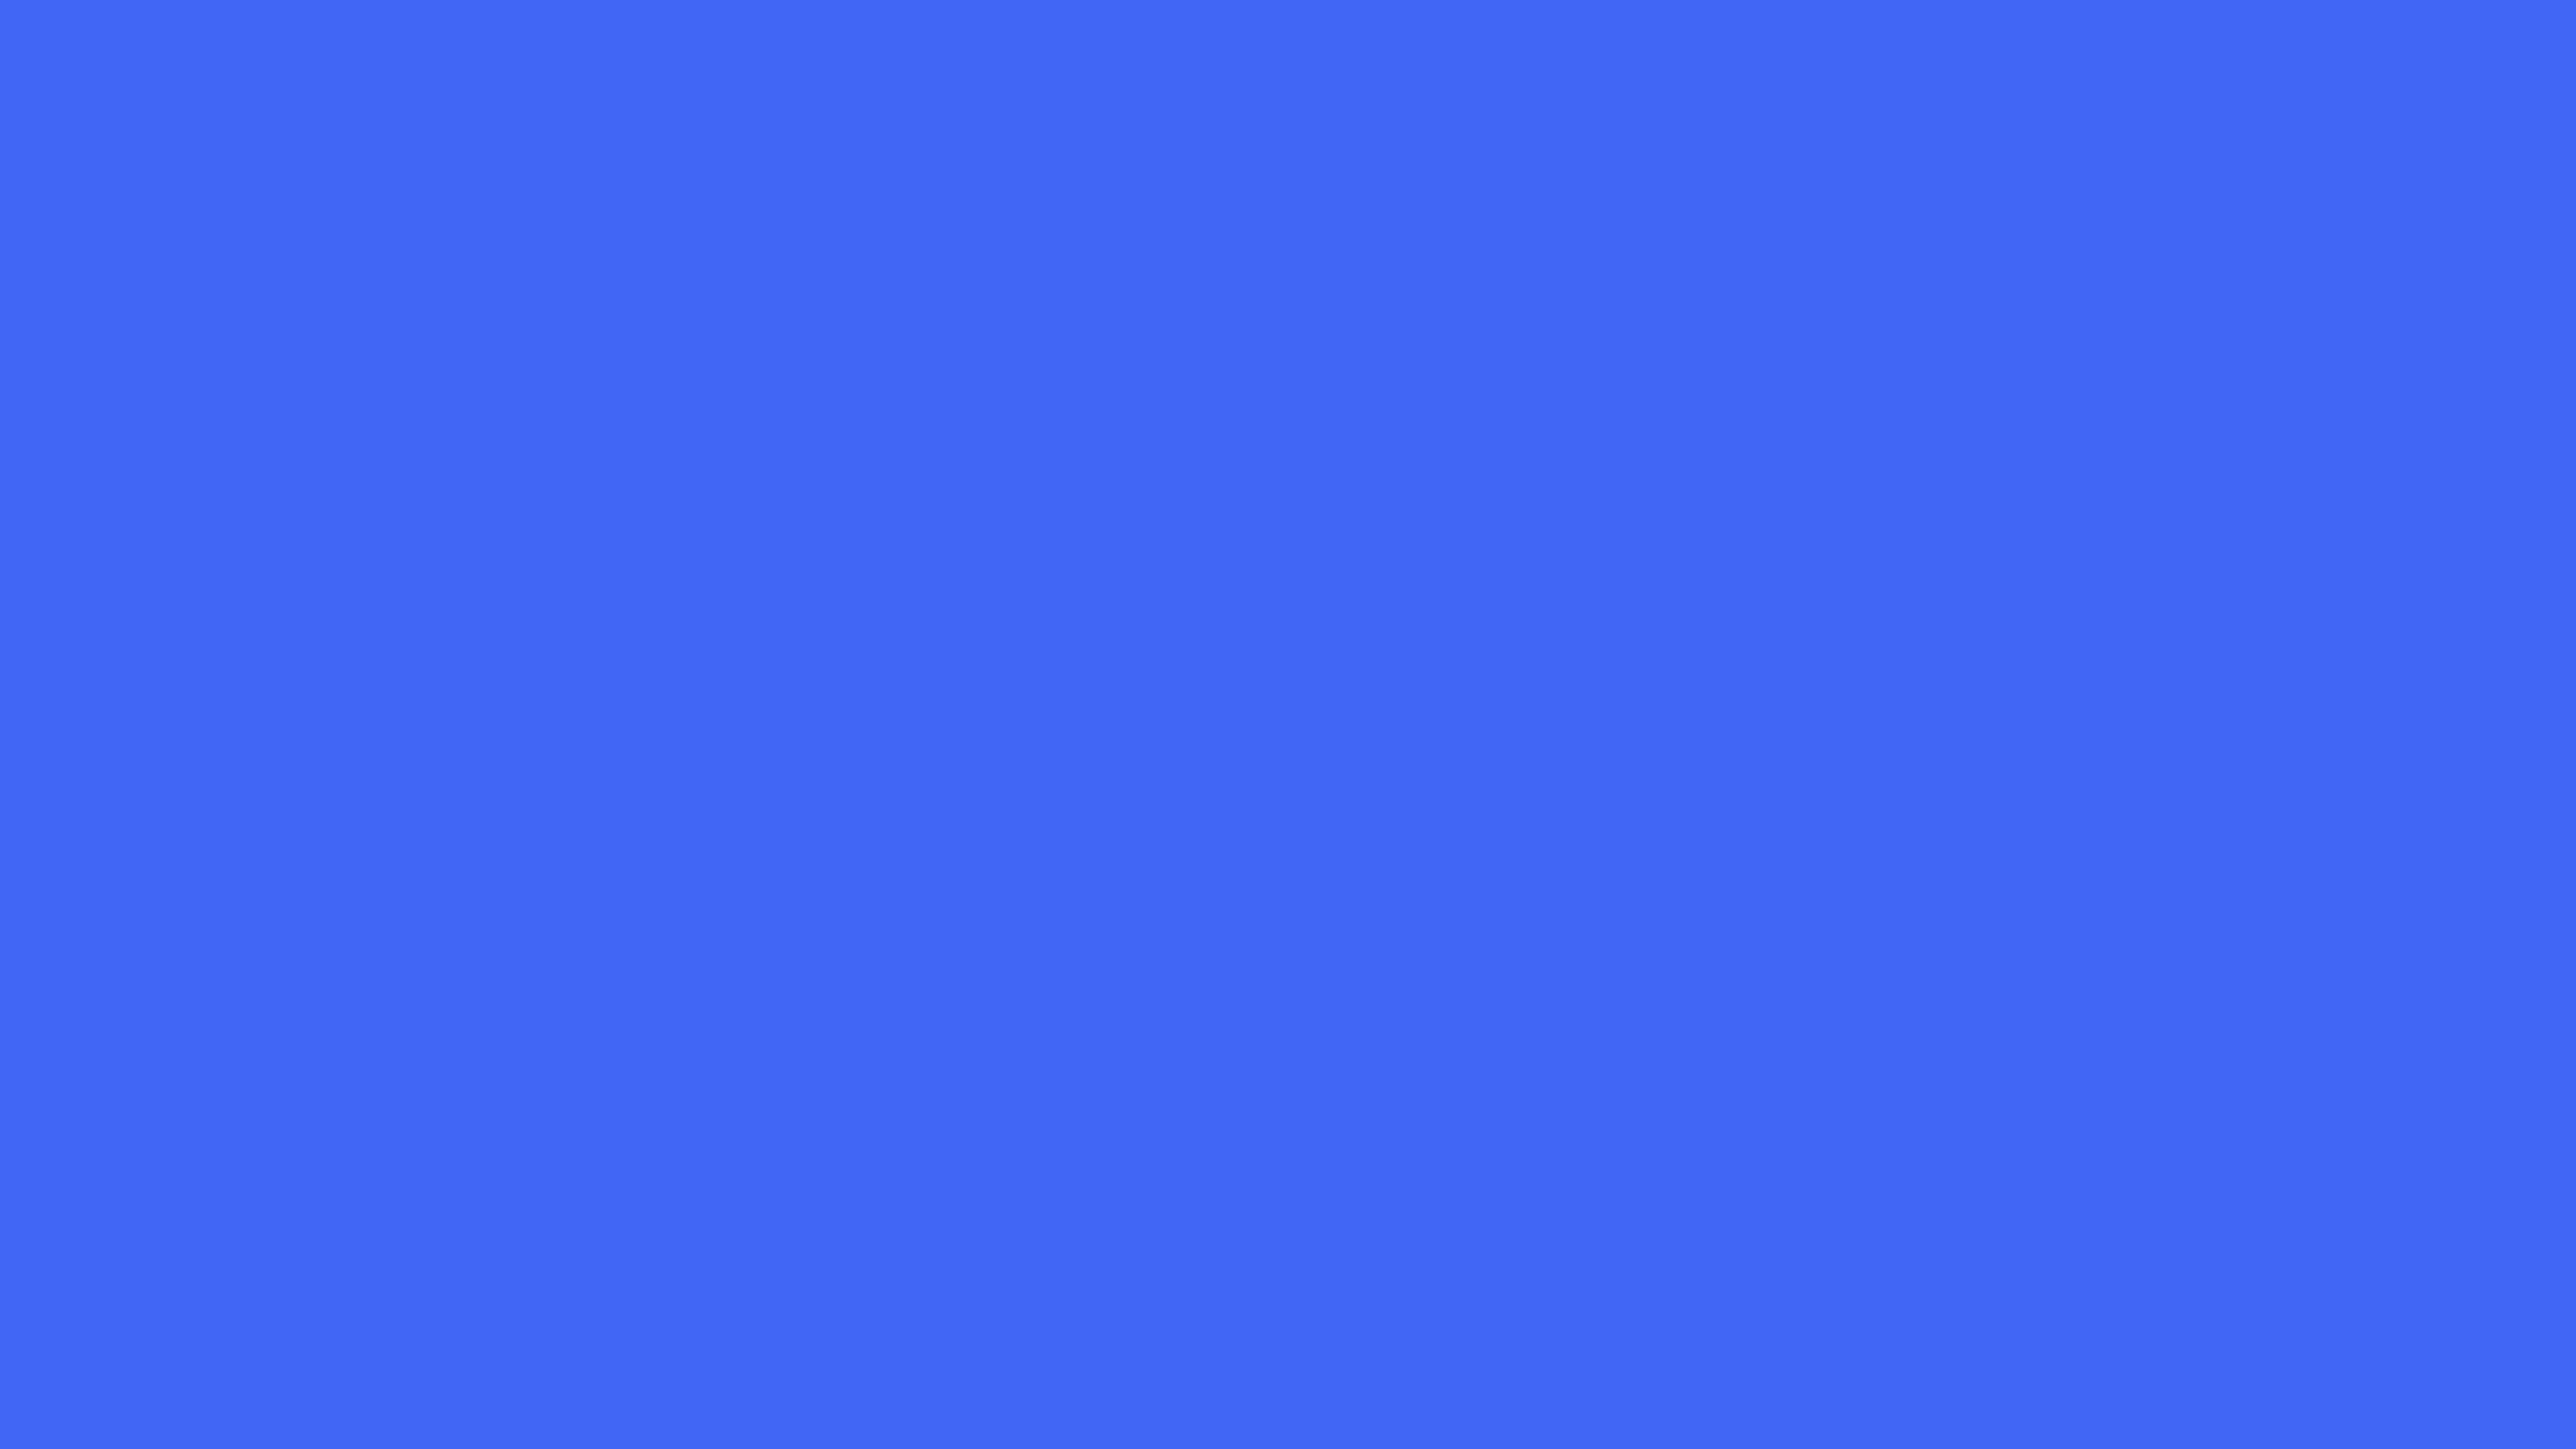 7680x4320 Ultramarine Blue Solid Color Background